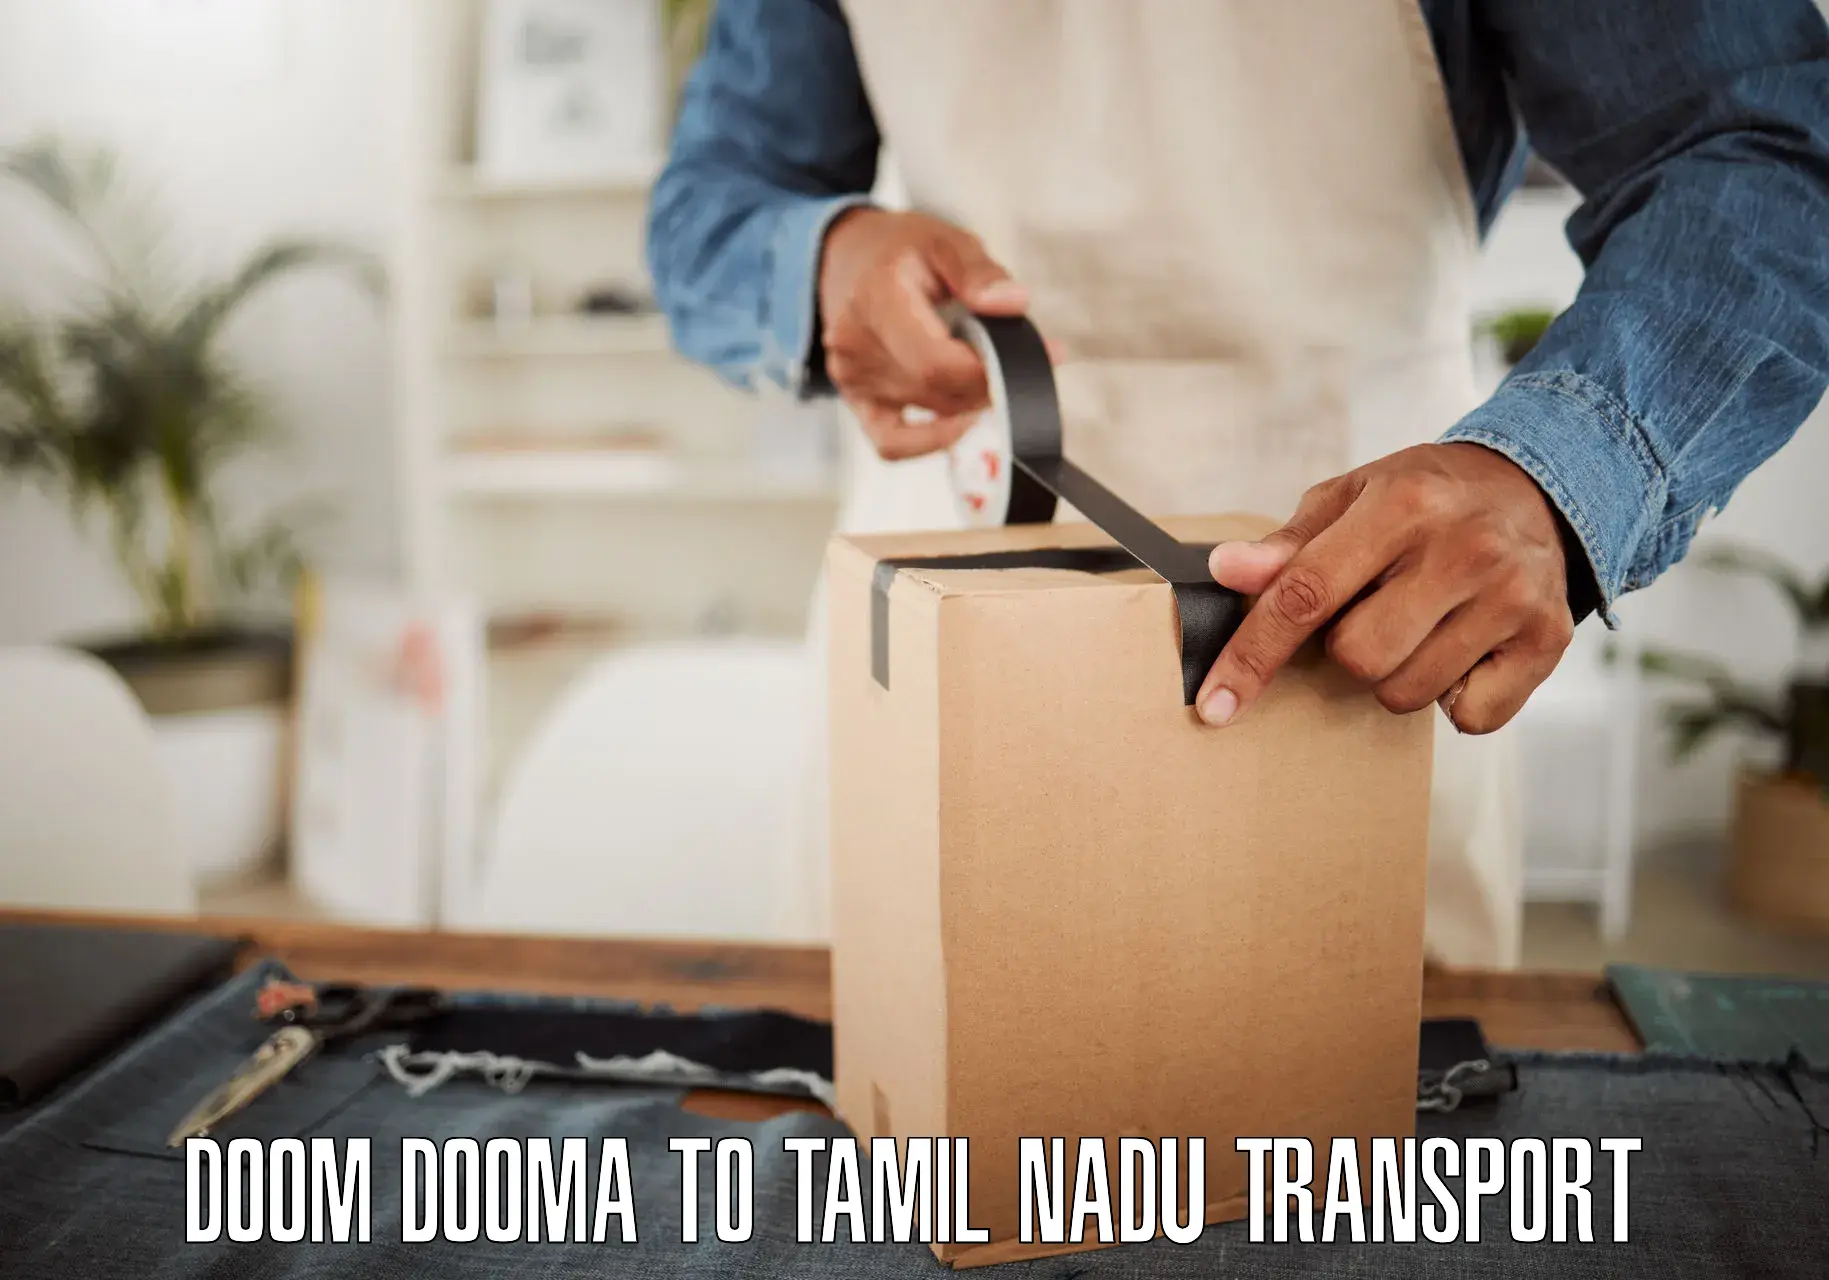 Cycle transportation service Doom Dooma to Tamil Nadu